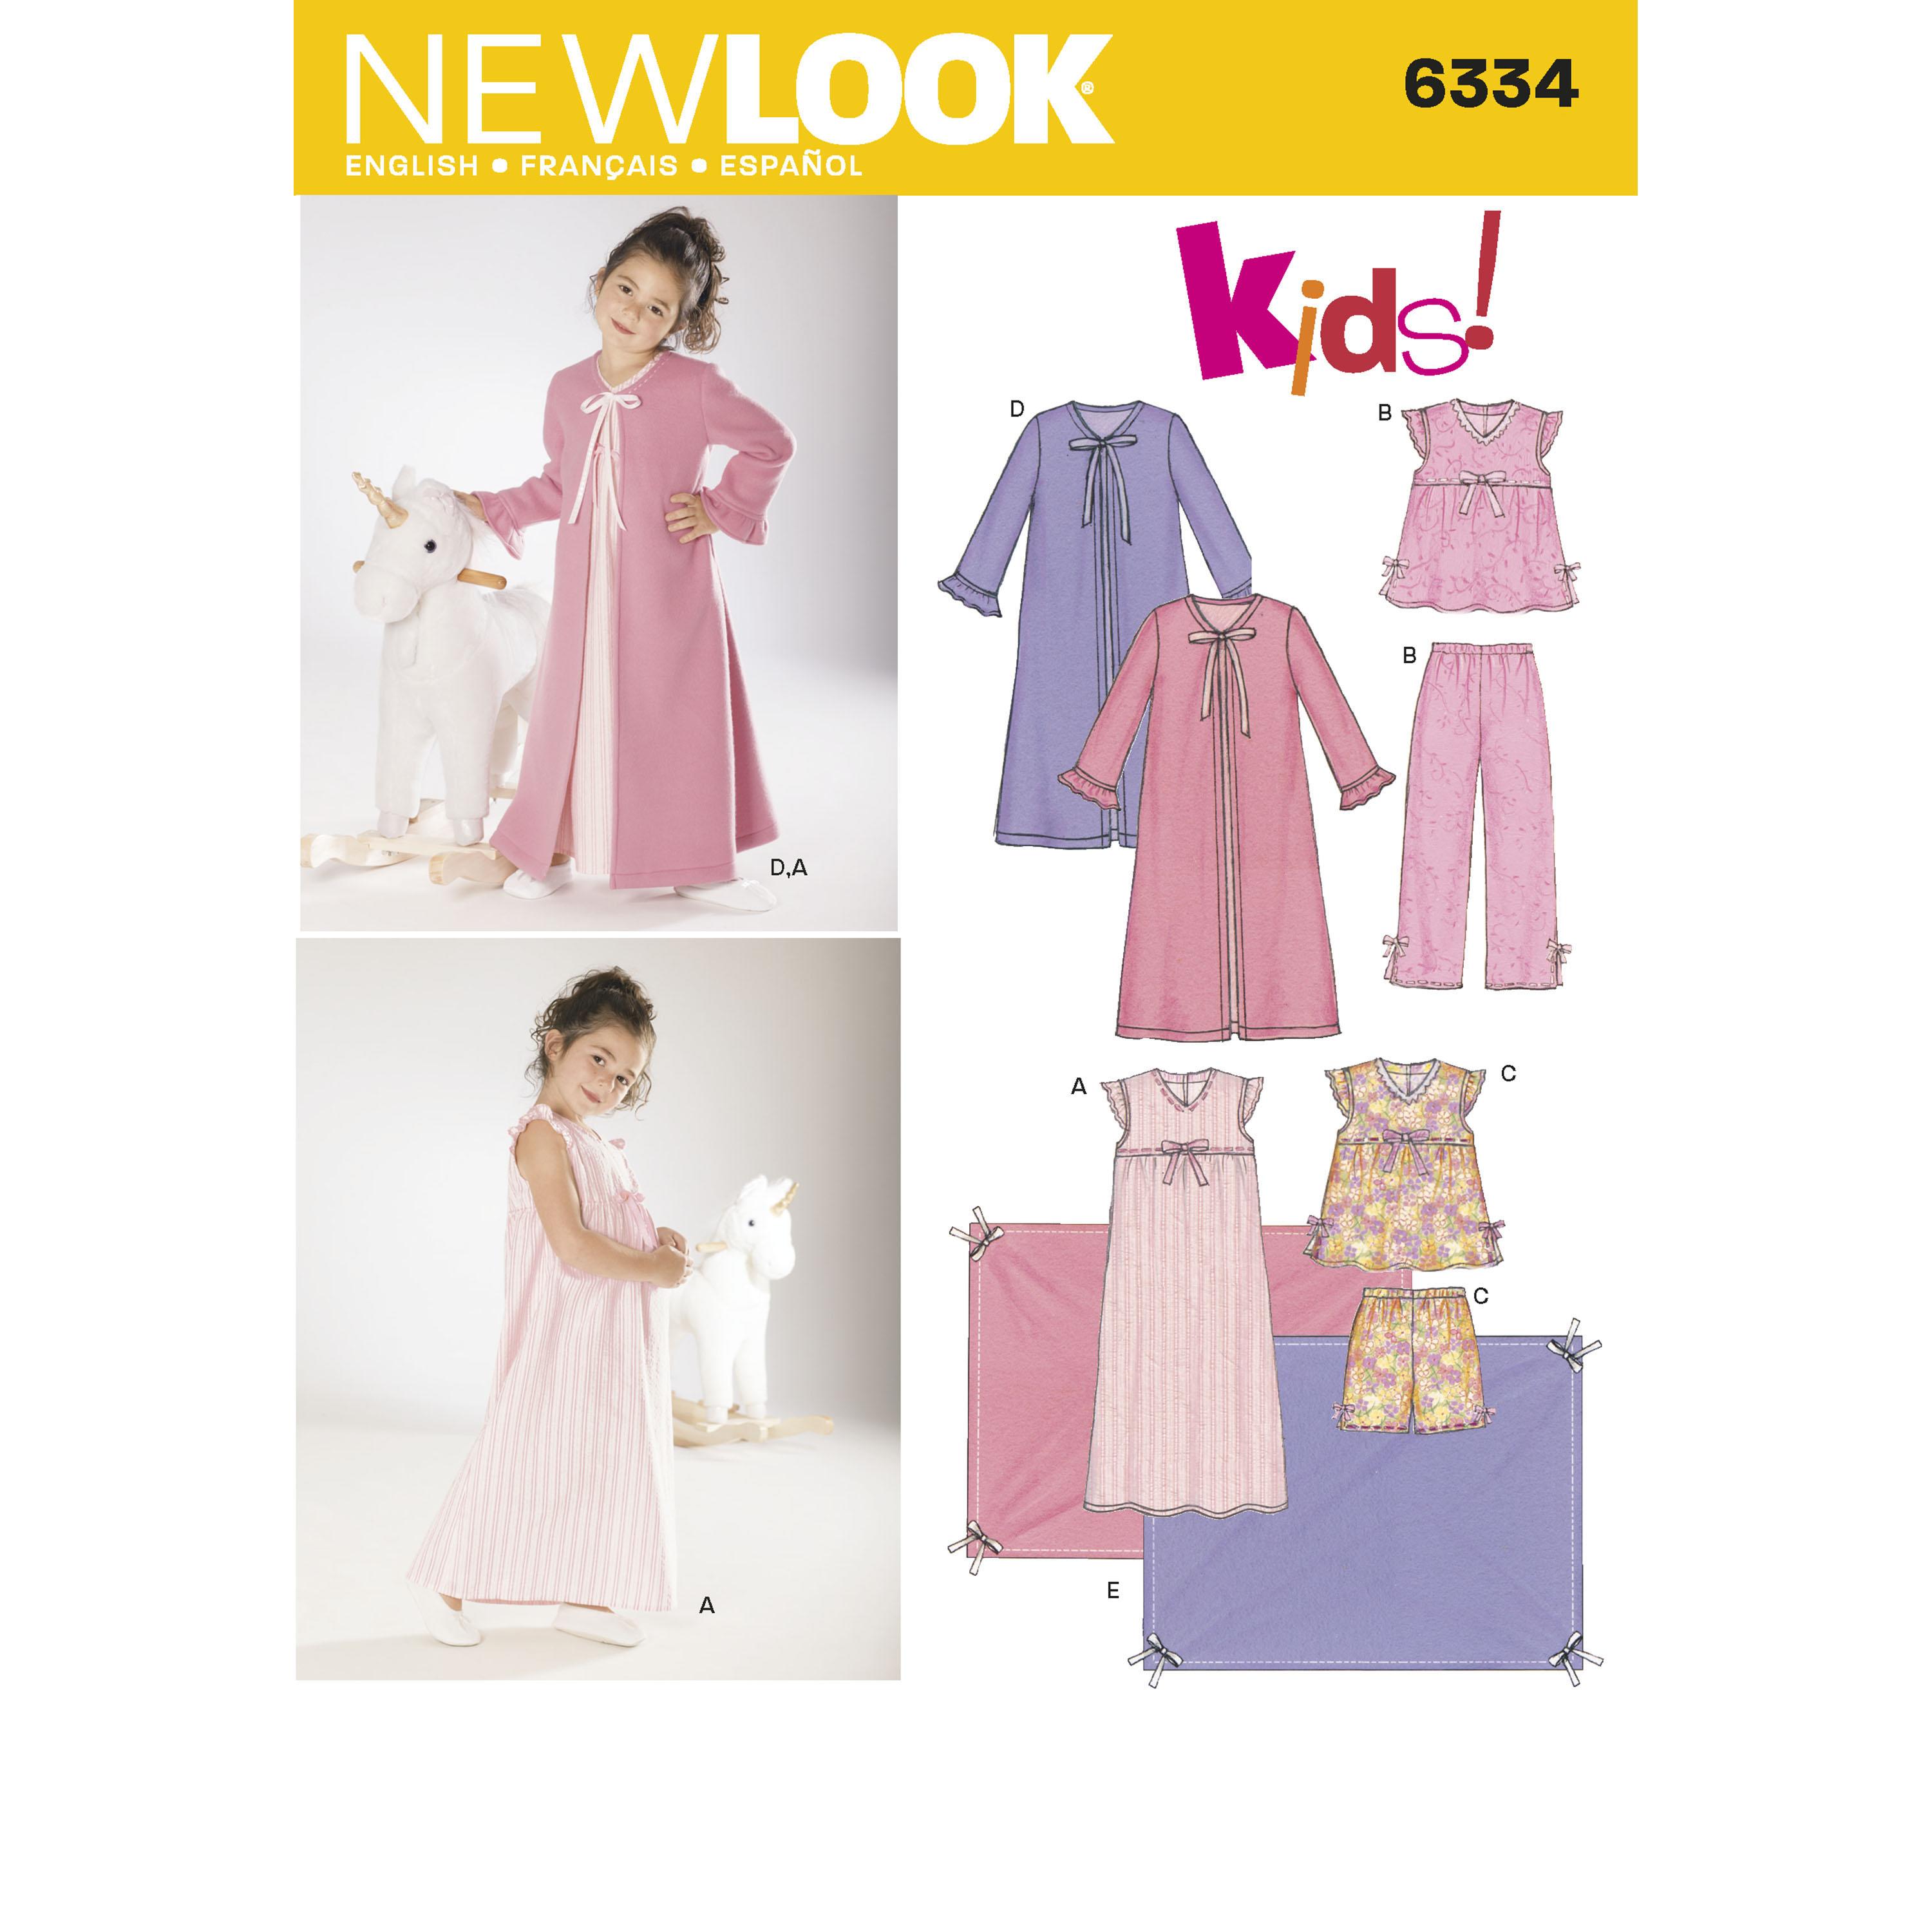 NewLook N6334 Child Sleepwear